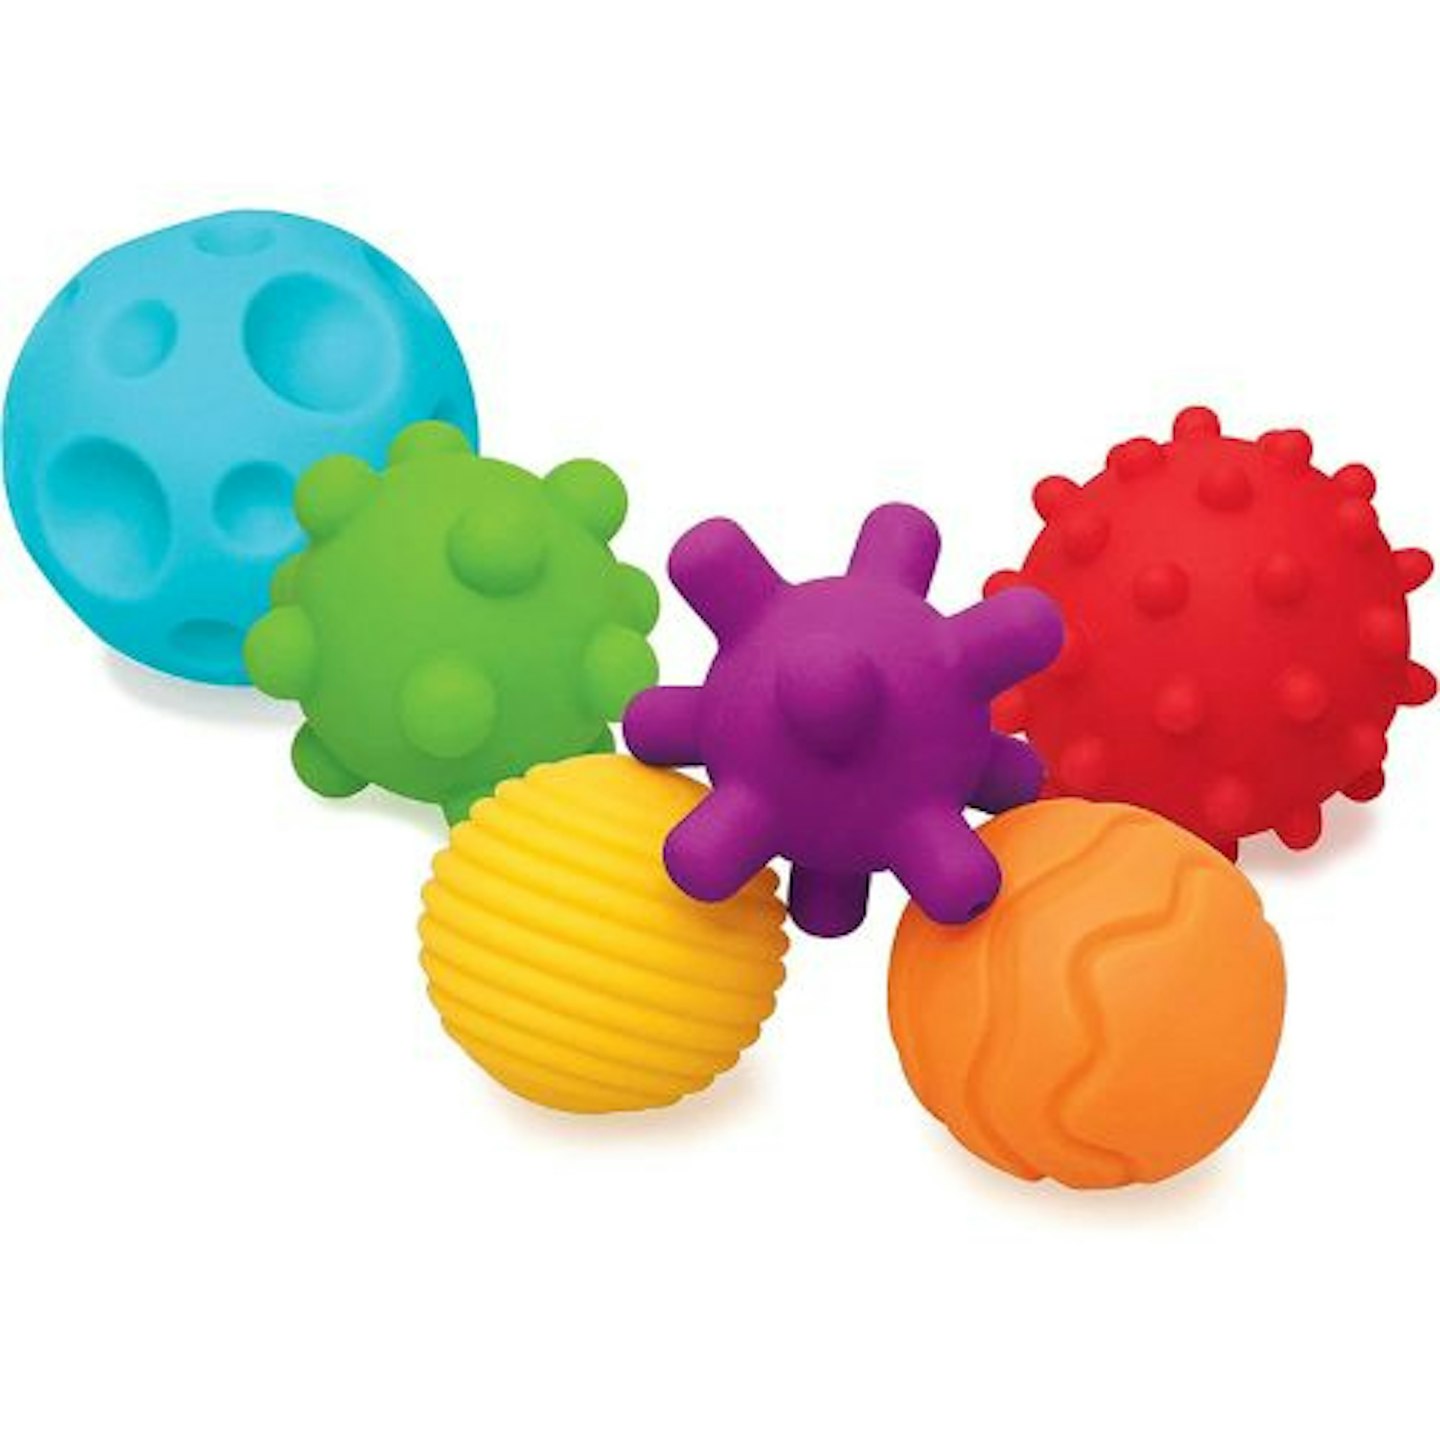 textured-ball-set-infantino-toy